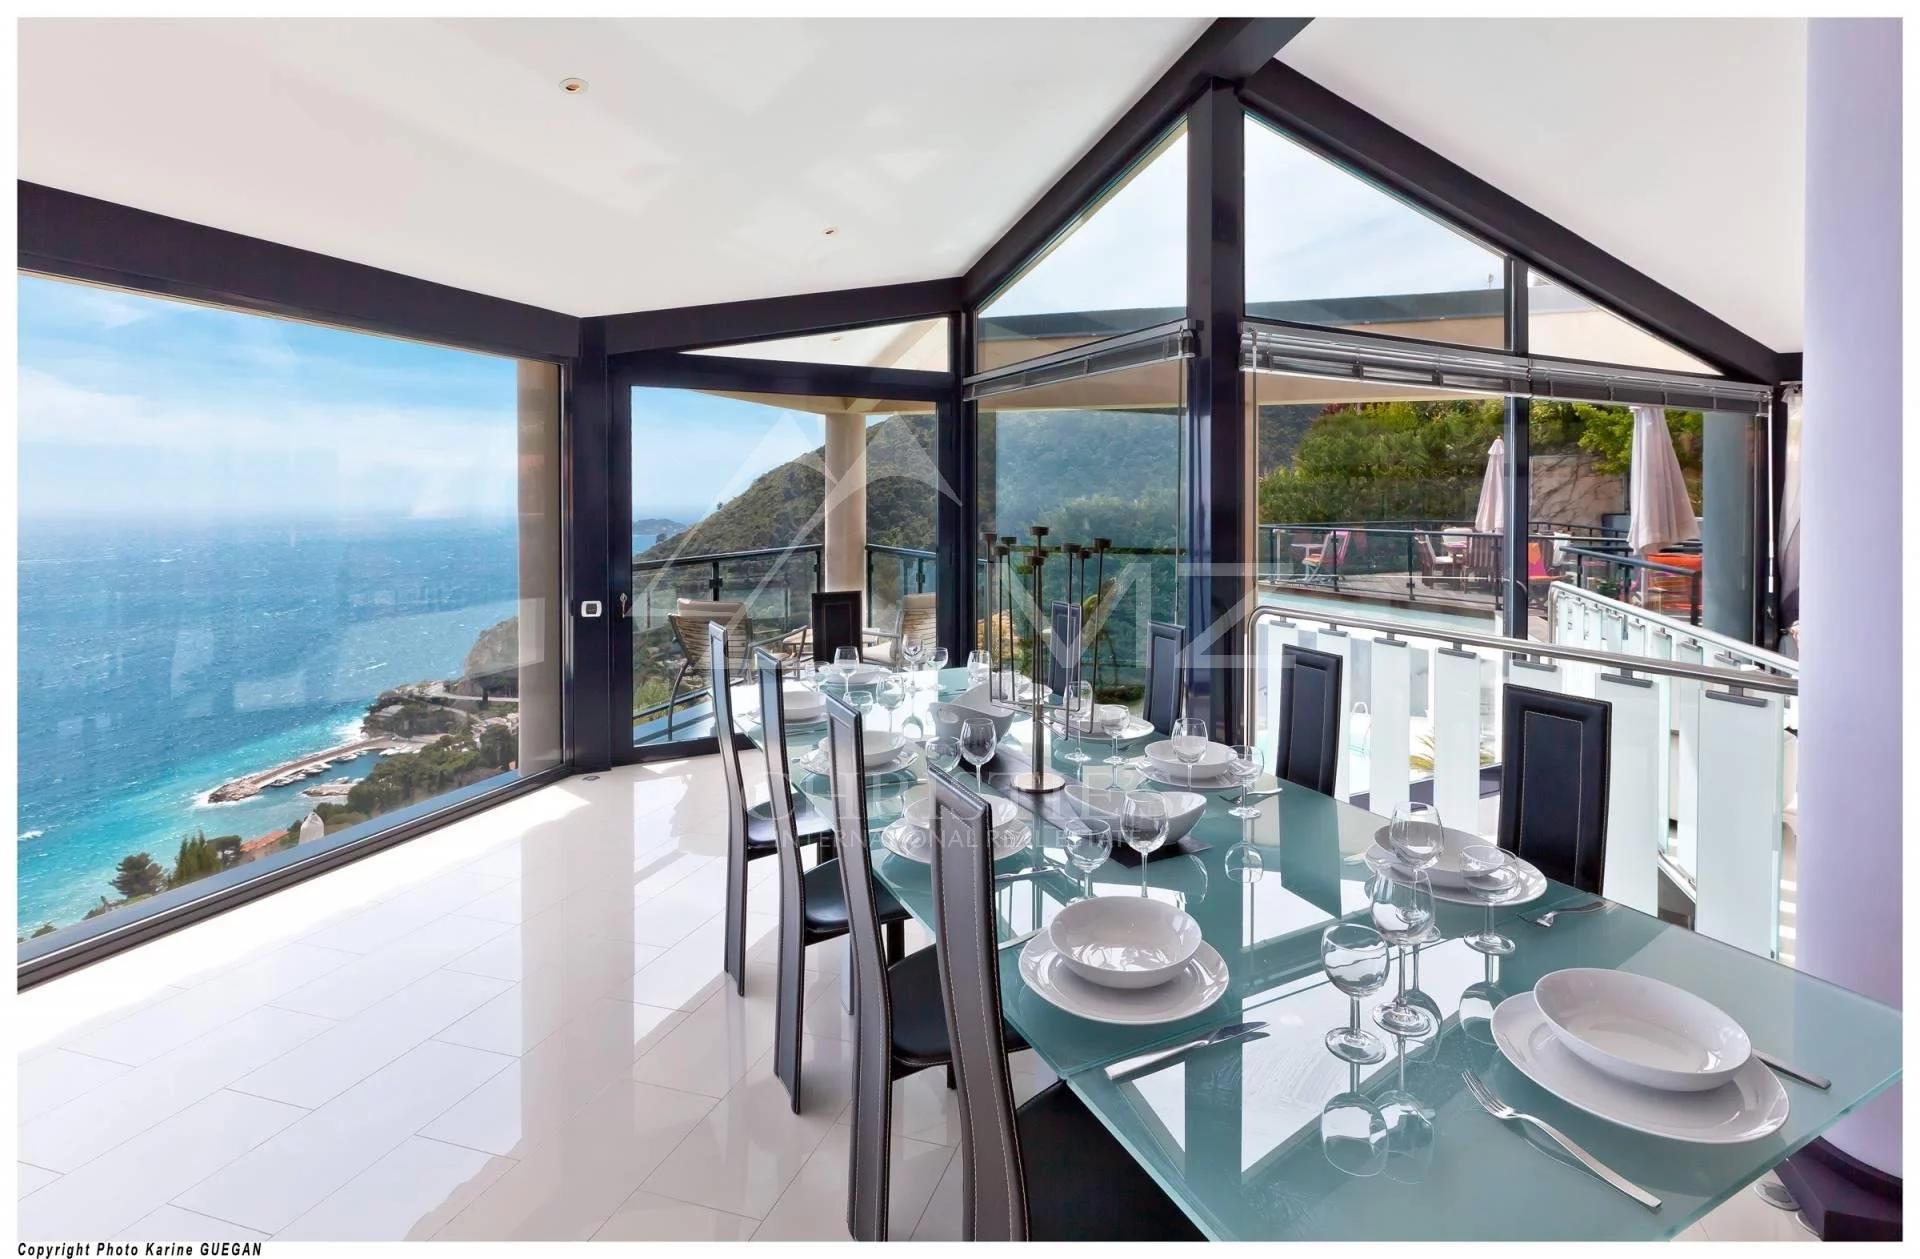 Eze - Splendid contemporary panoramic sea view villa